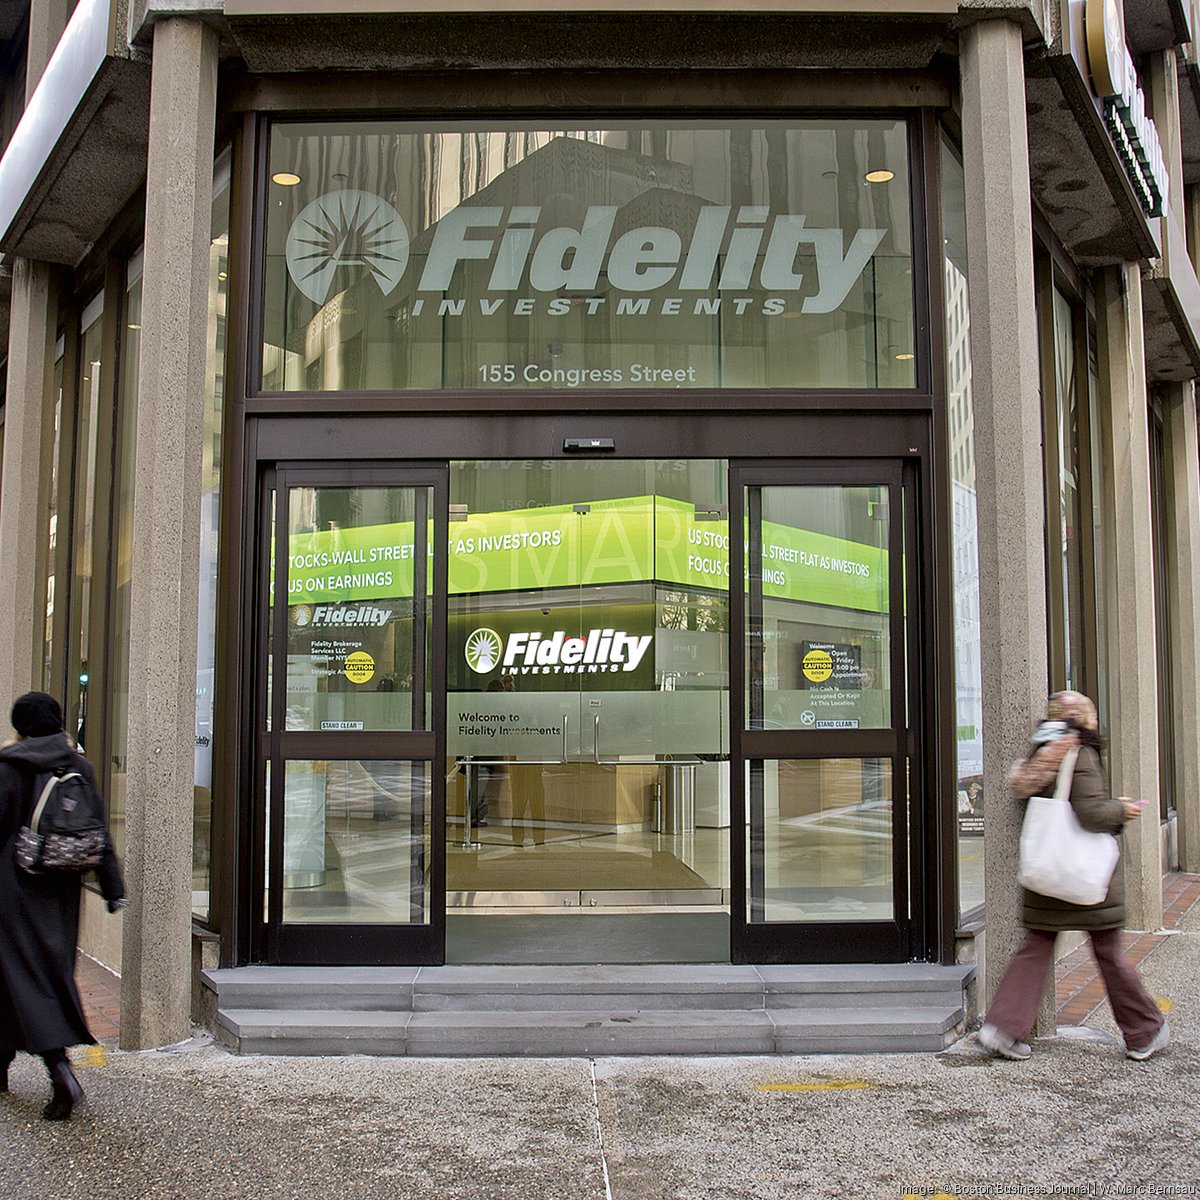 Fidelity Scholars Program - UNCF